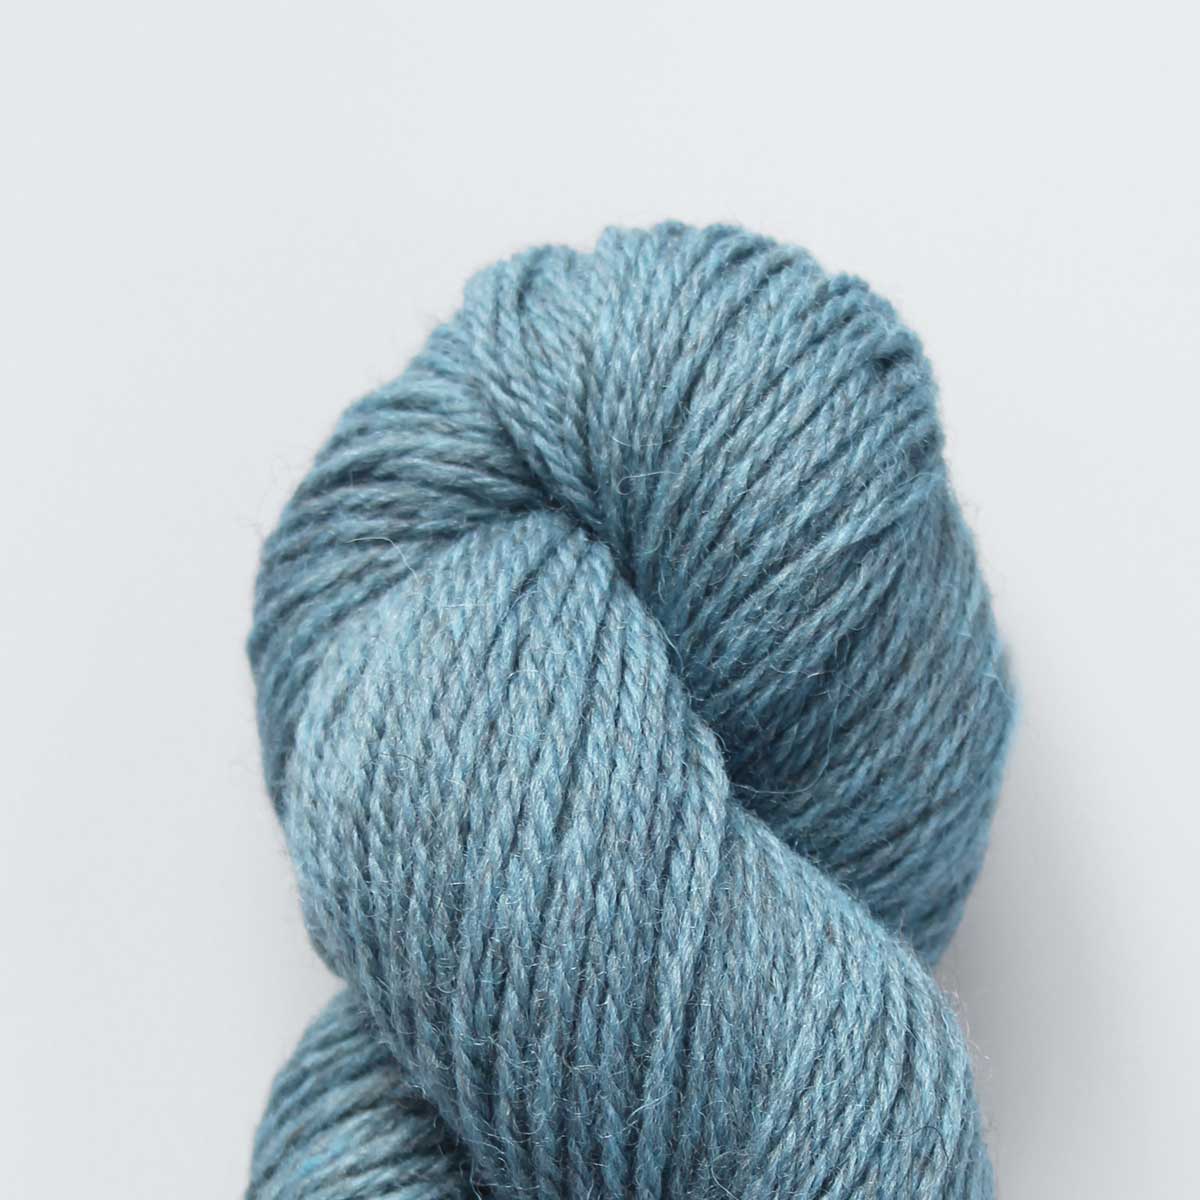 Woodnote DK: 34% Bluefaced Leicester, 33% Masham, 33% Merino Hand Knitting Wool 100g Hank